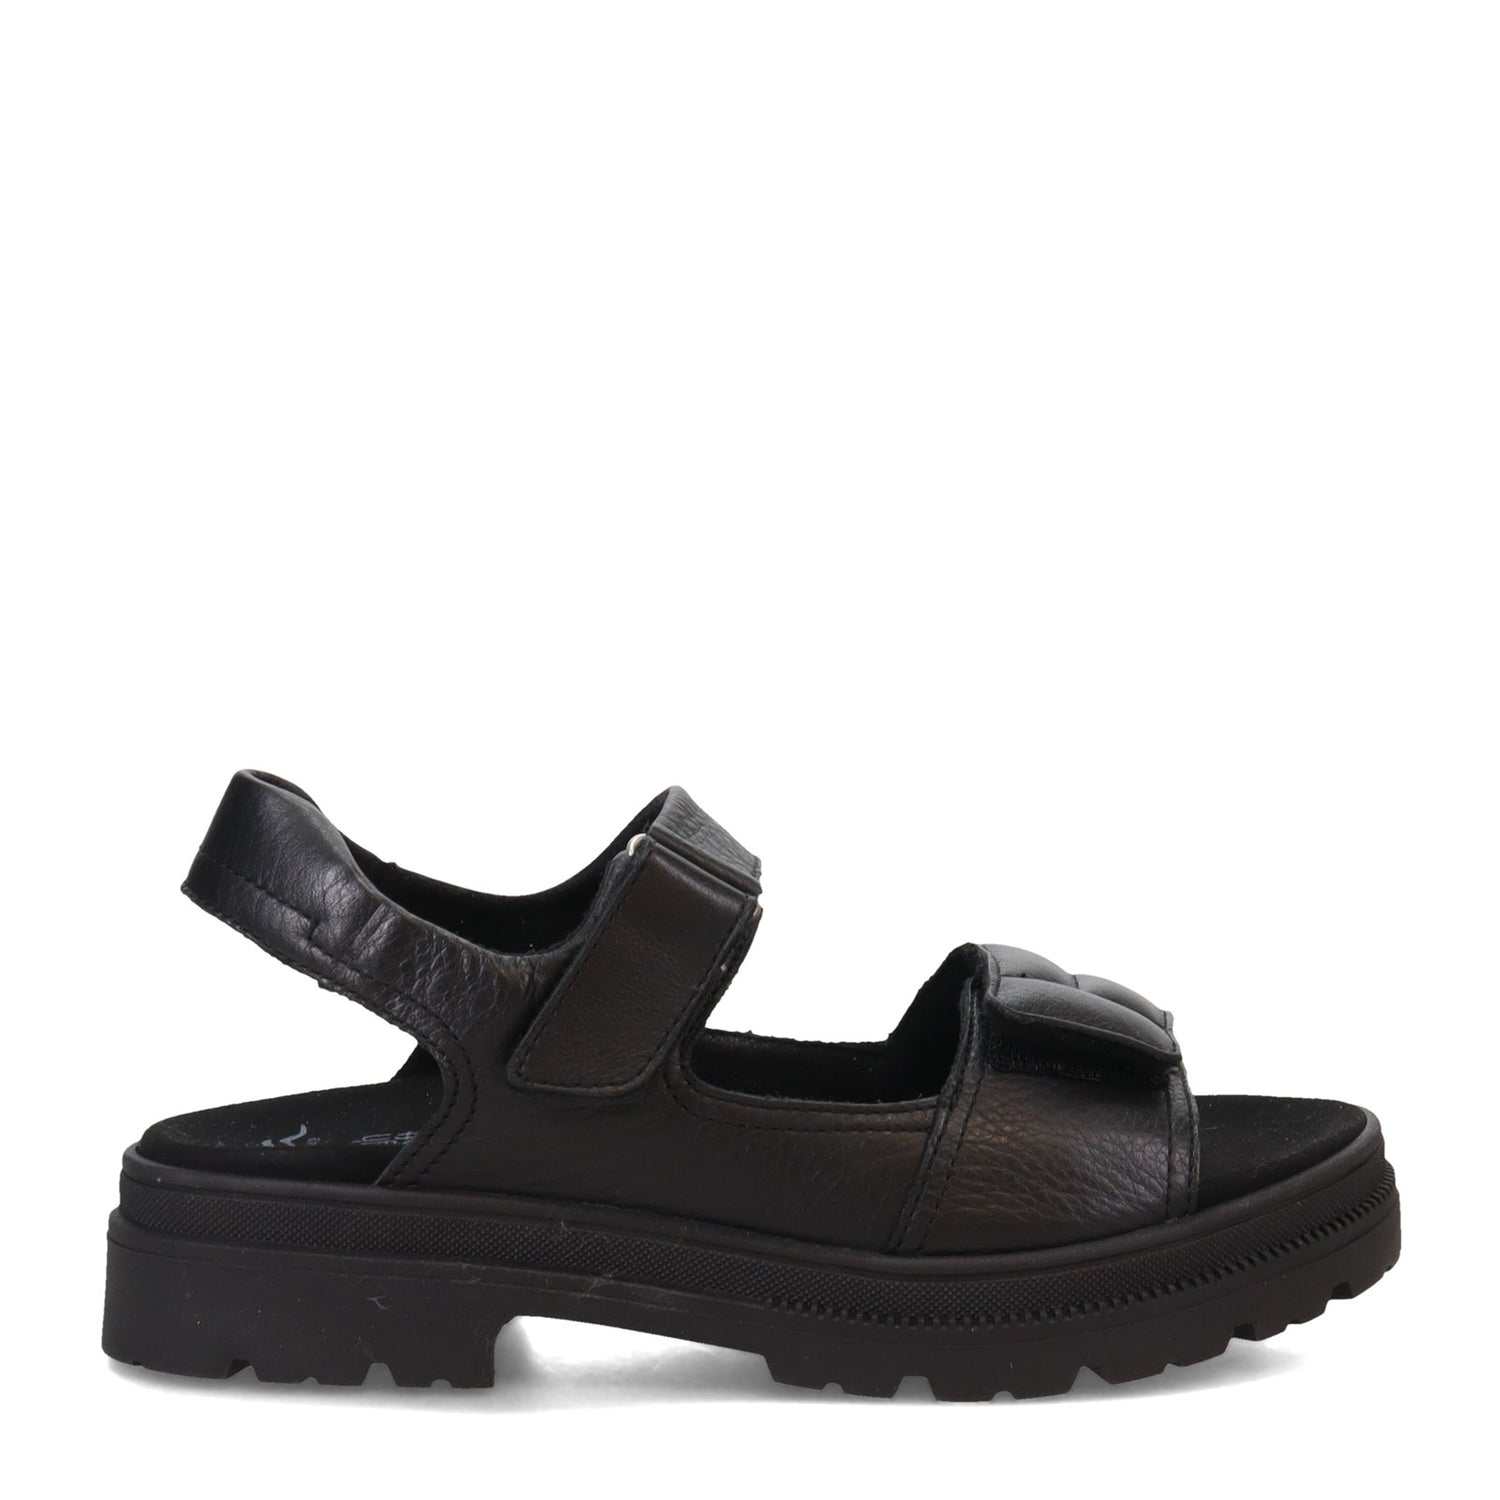 Peltz Shoes  Women's ara Danya Sandal Black 12-21304-01